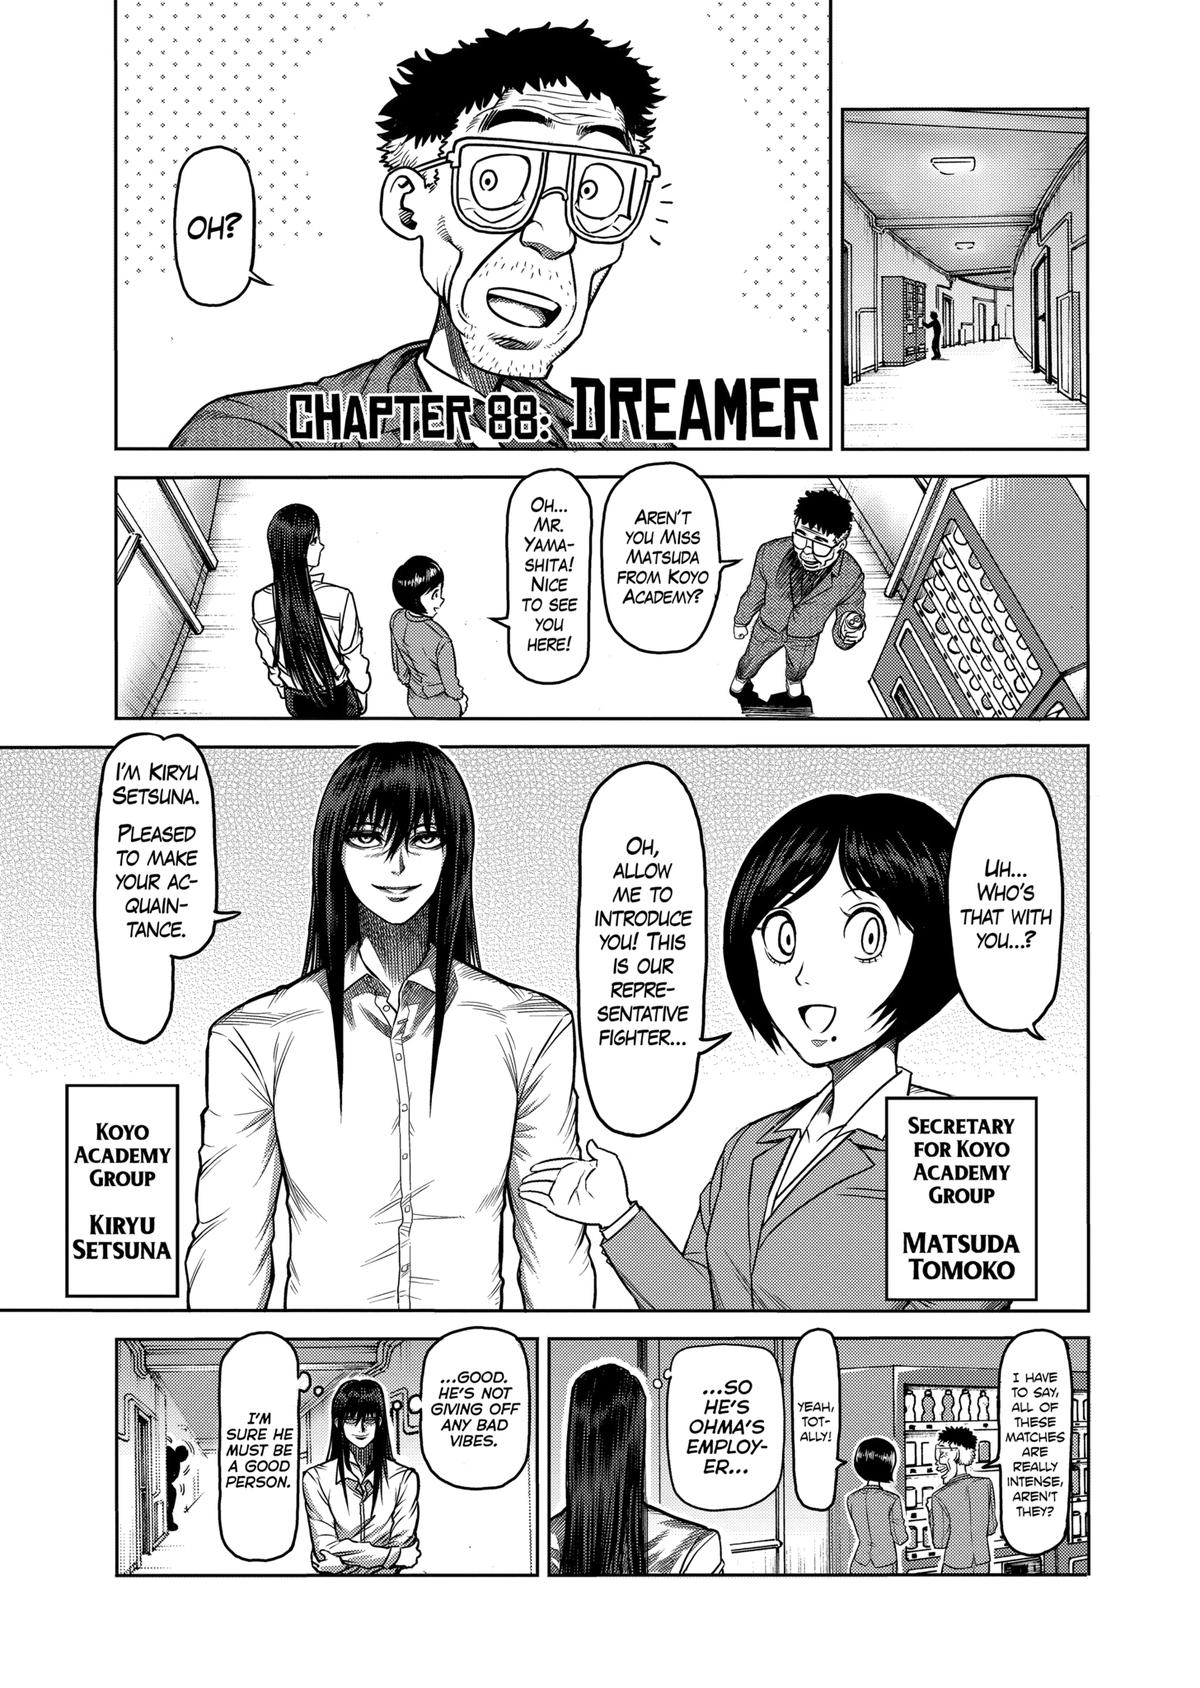 Domestic Girlfriend, Chapter 185 - Domestic Girlfriend Manga Online